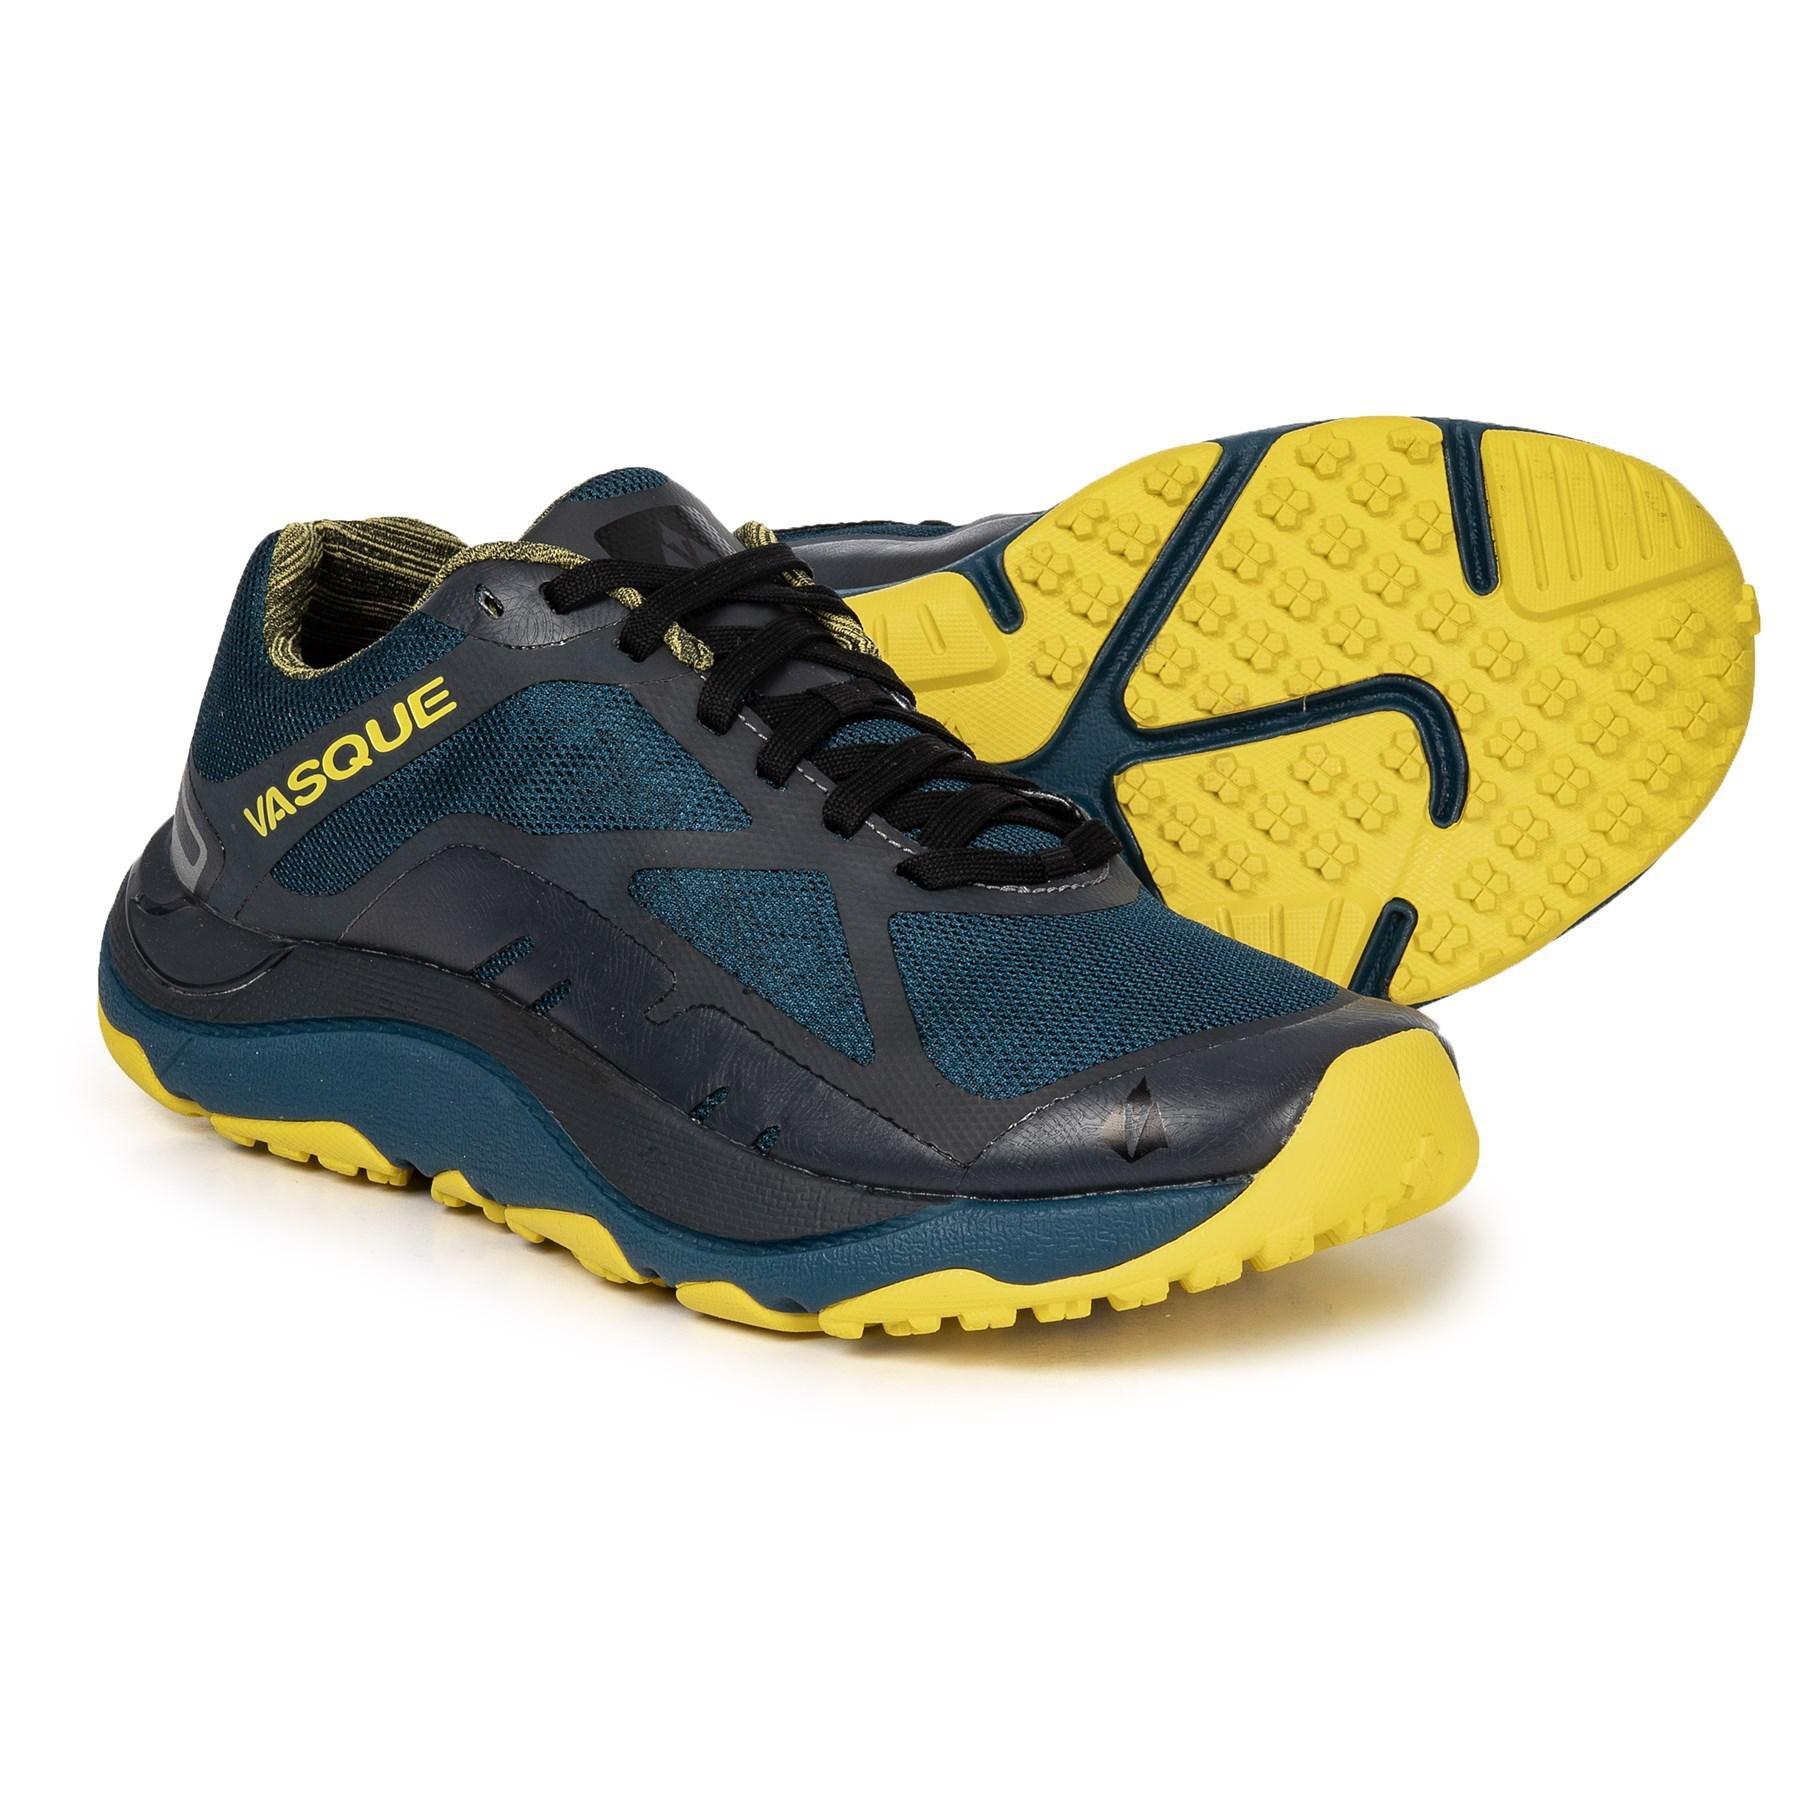 Lyst - Vasque Trailbender Ii Trail Running Shoes (for Men) in Green for Men